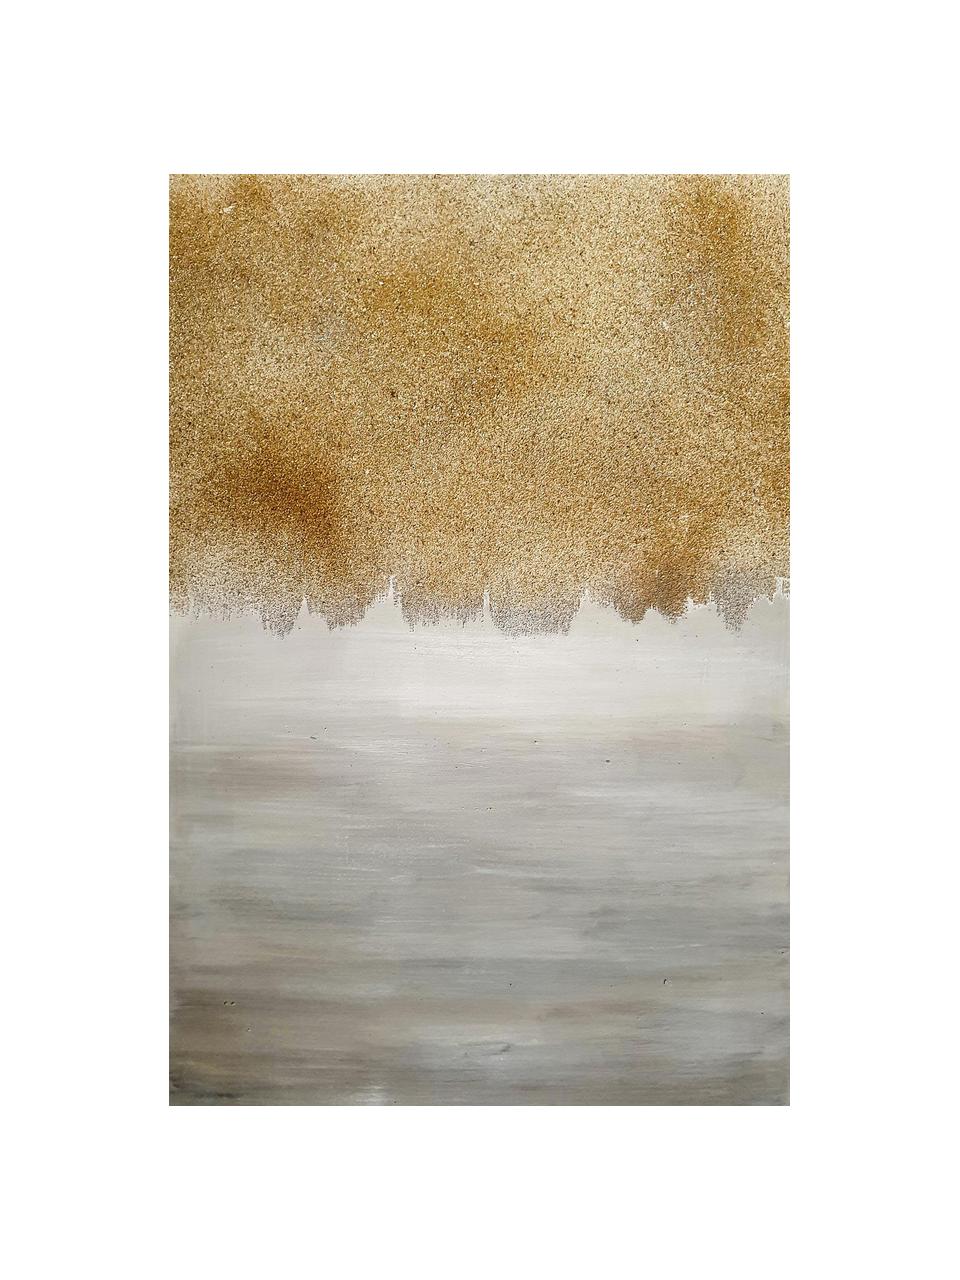 Handbemalt Leinwandbild Sandy Abstract, Bild: Leinwand, Grautöne, Goldfarben, B 84 x H 120 cm